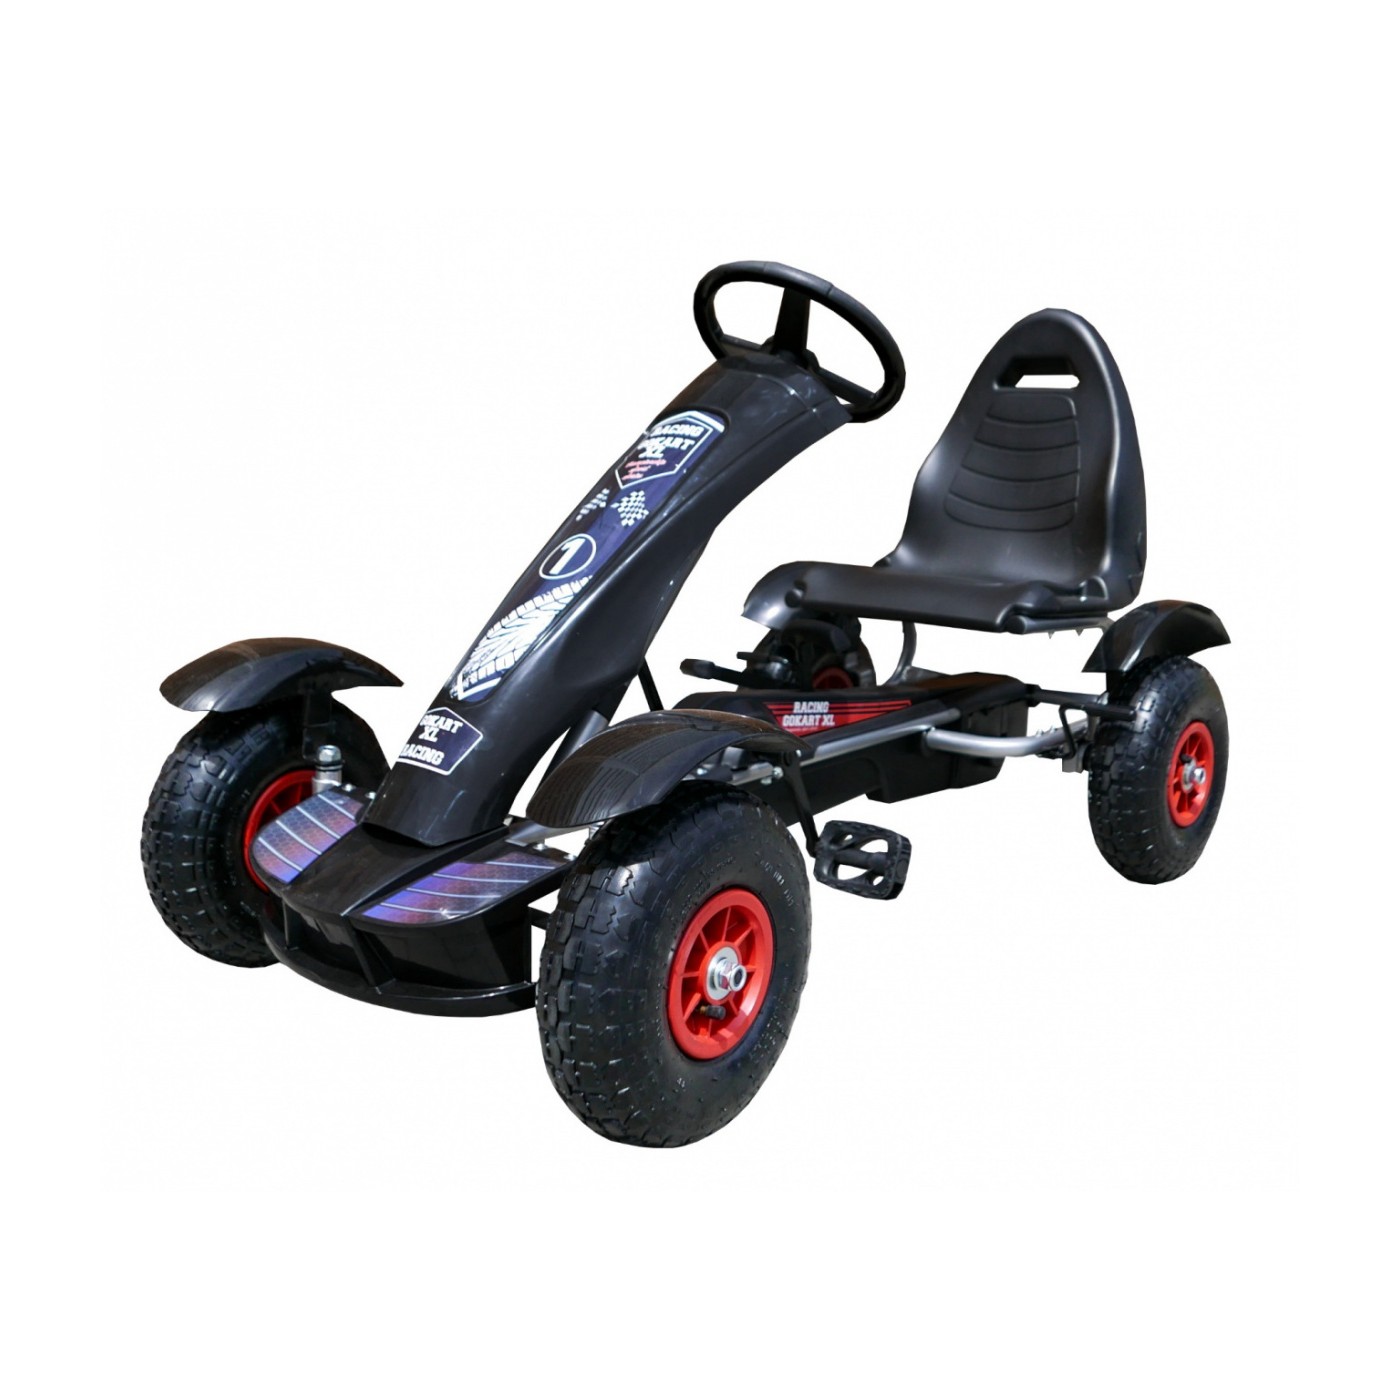 Large Go-Kart Inflatable Wheels Black